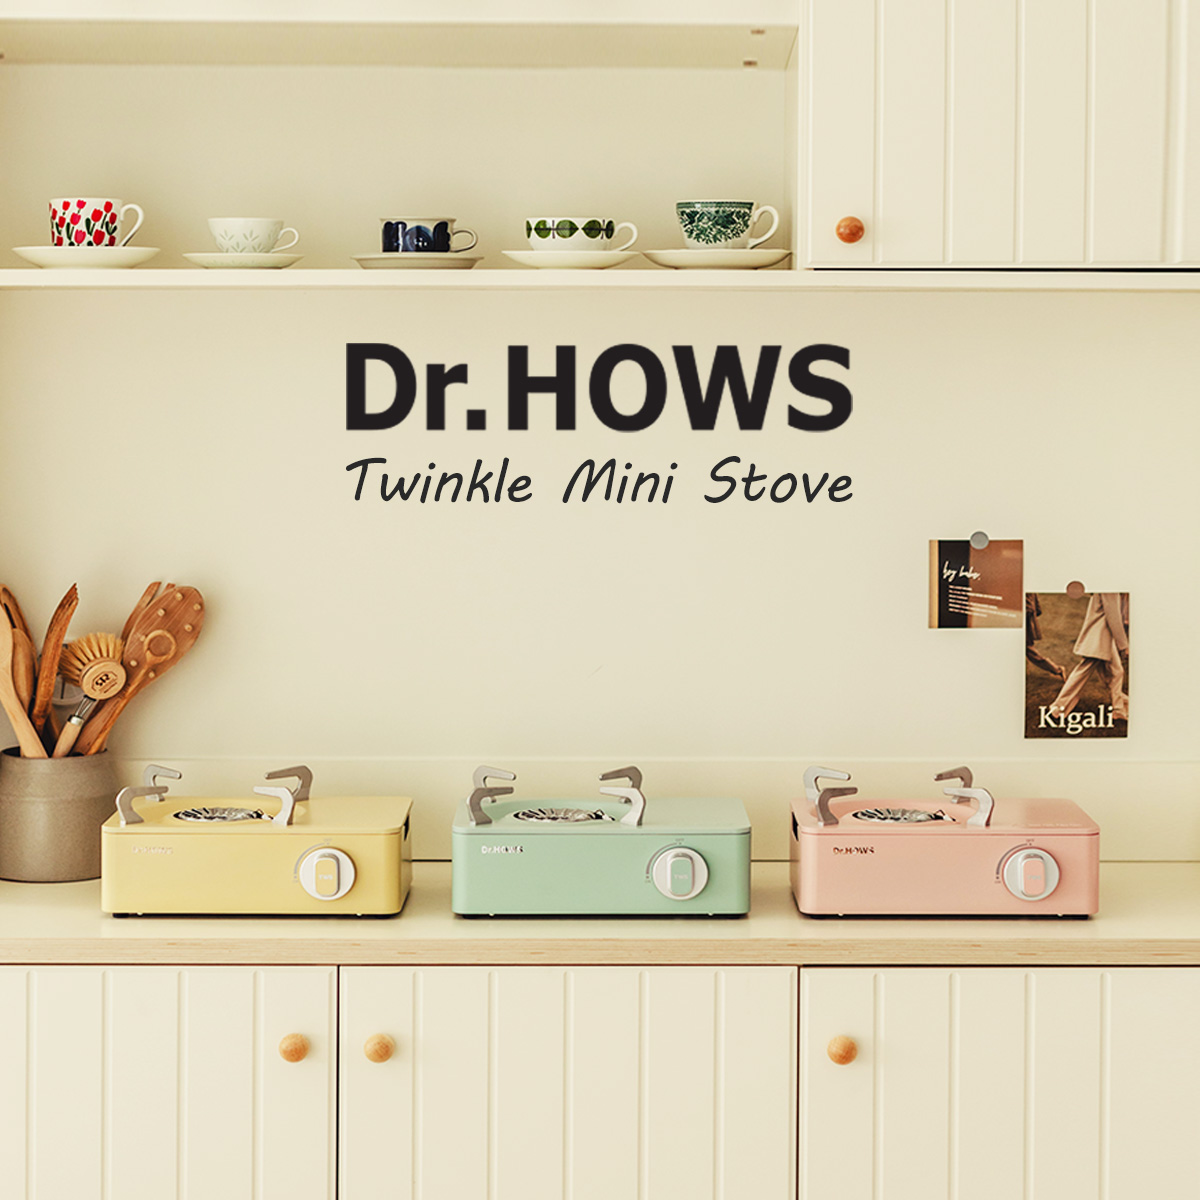 Dr.HOWS JAPAN (@drhows_japan) / X